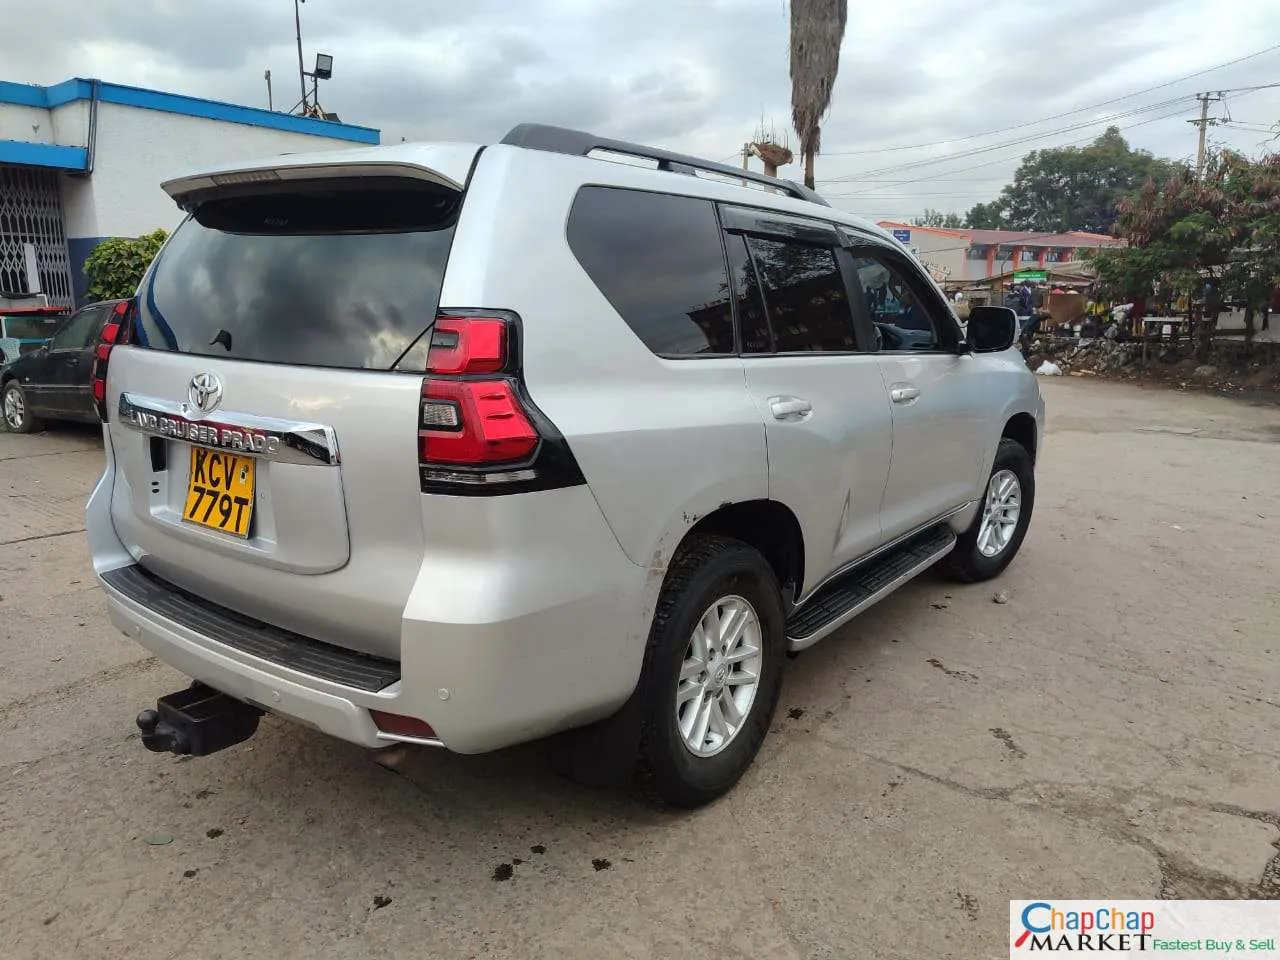 Toyota PRADO J150 for sale in Kenya VXL Quick SALE TRADE IN OK EXCLUSIVE!